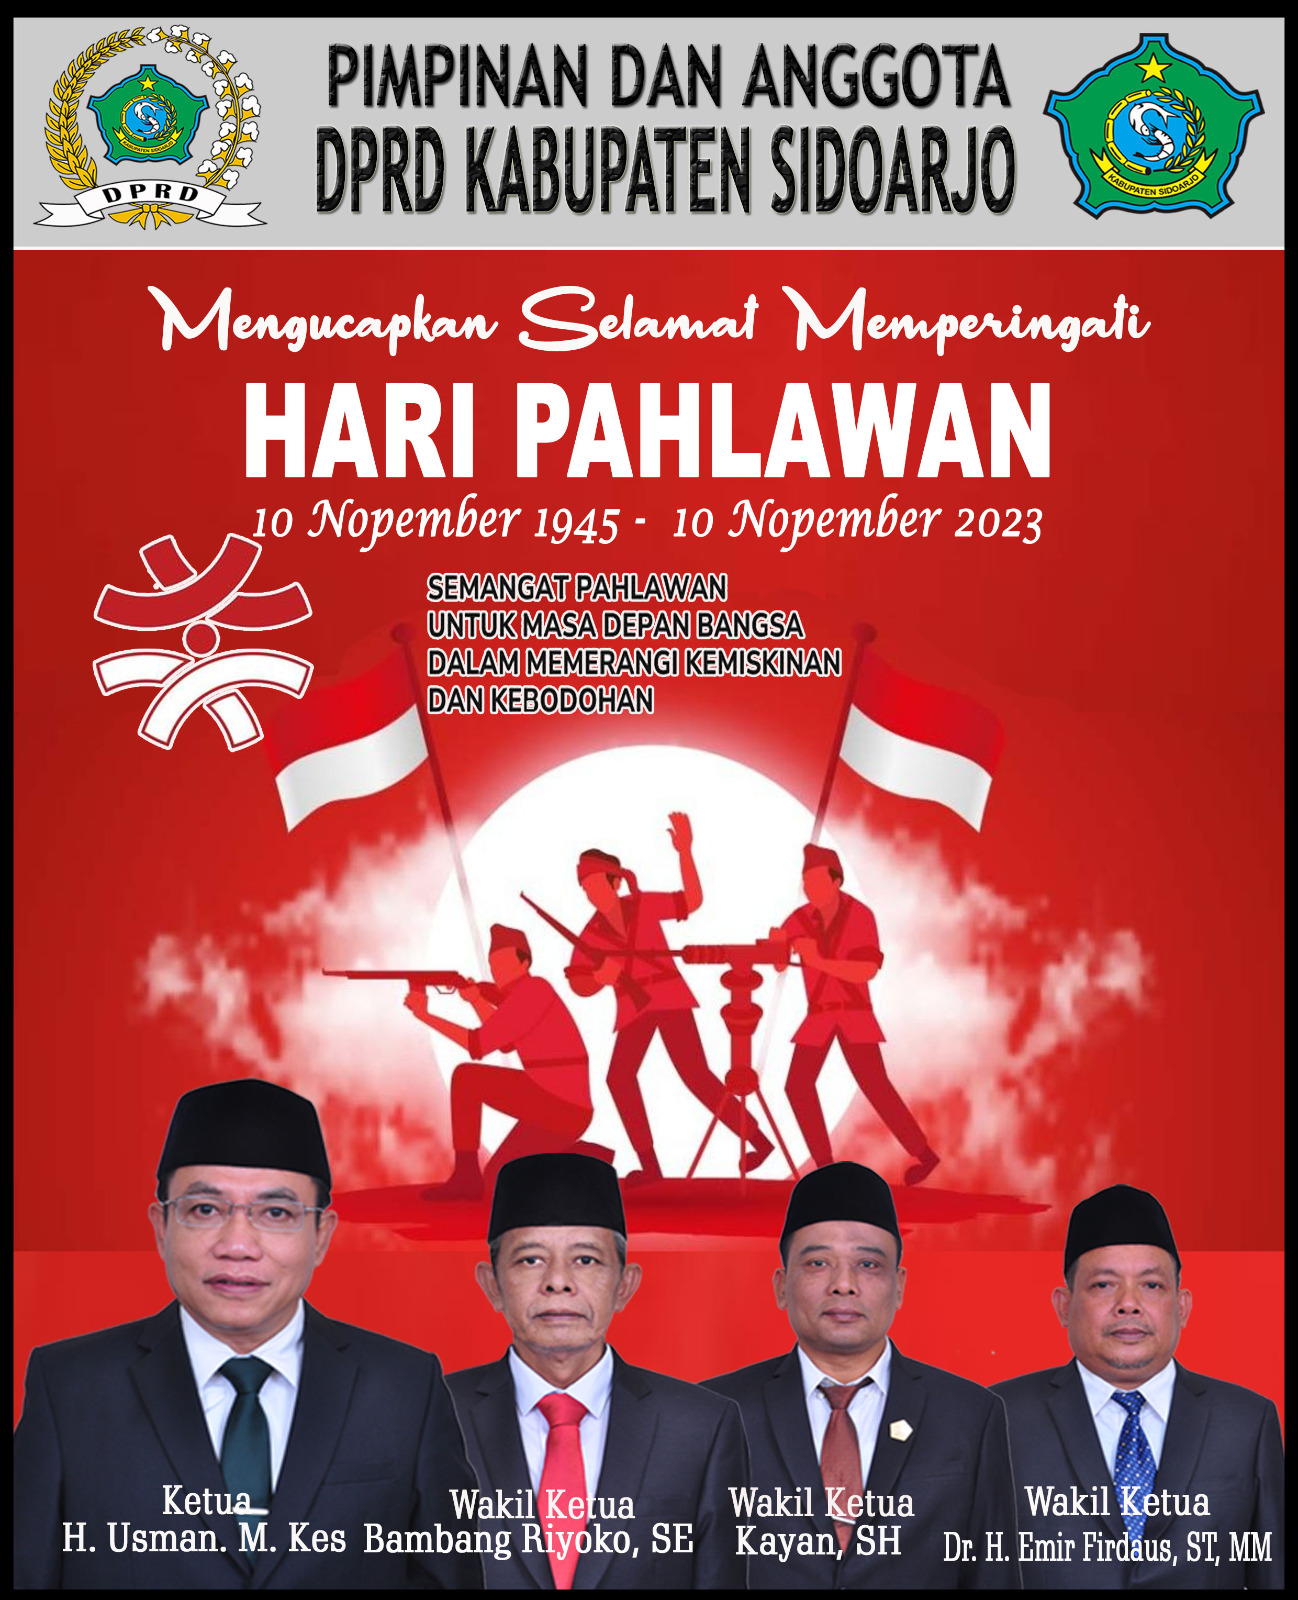 Pimpinan dan Anggota DPRD Kabupaten Sidoarjo Mengucapakan Selamat Memperingati Hari Pahlawan Ke-78 Tahun 2023